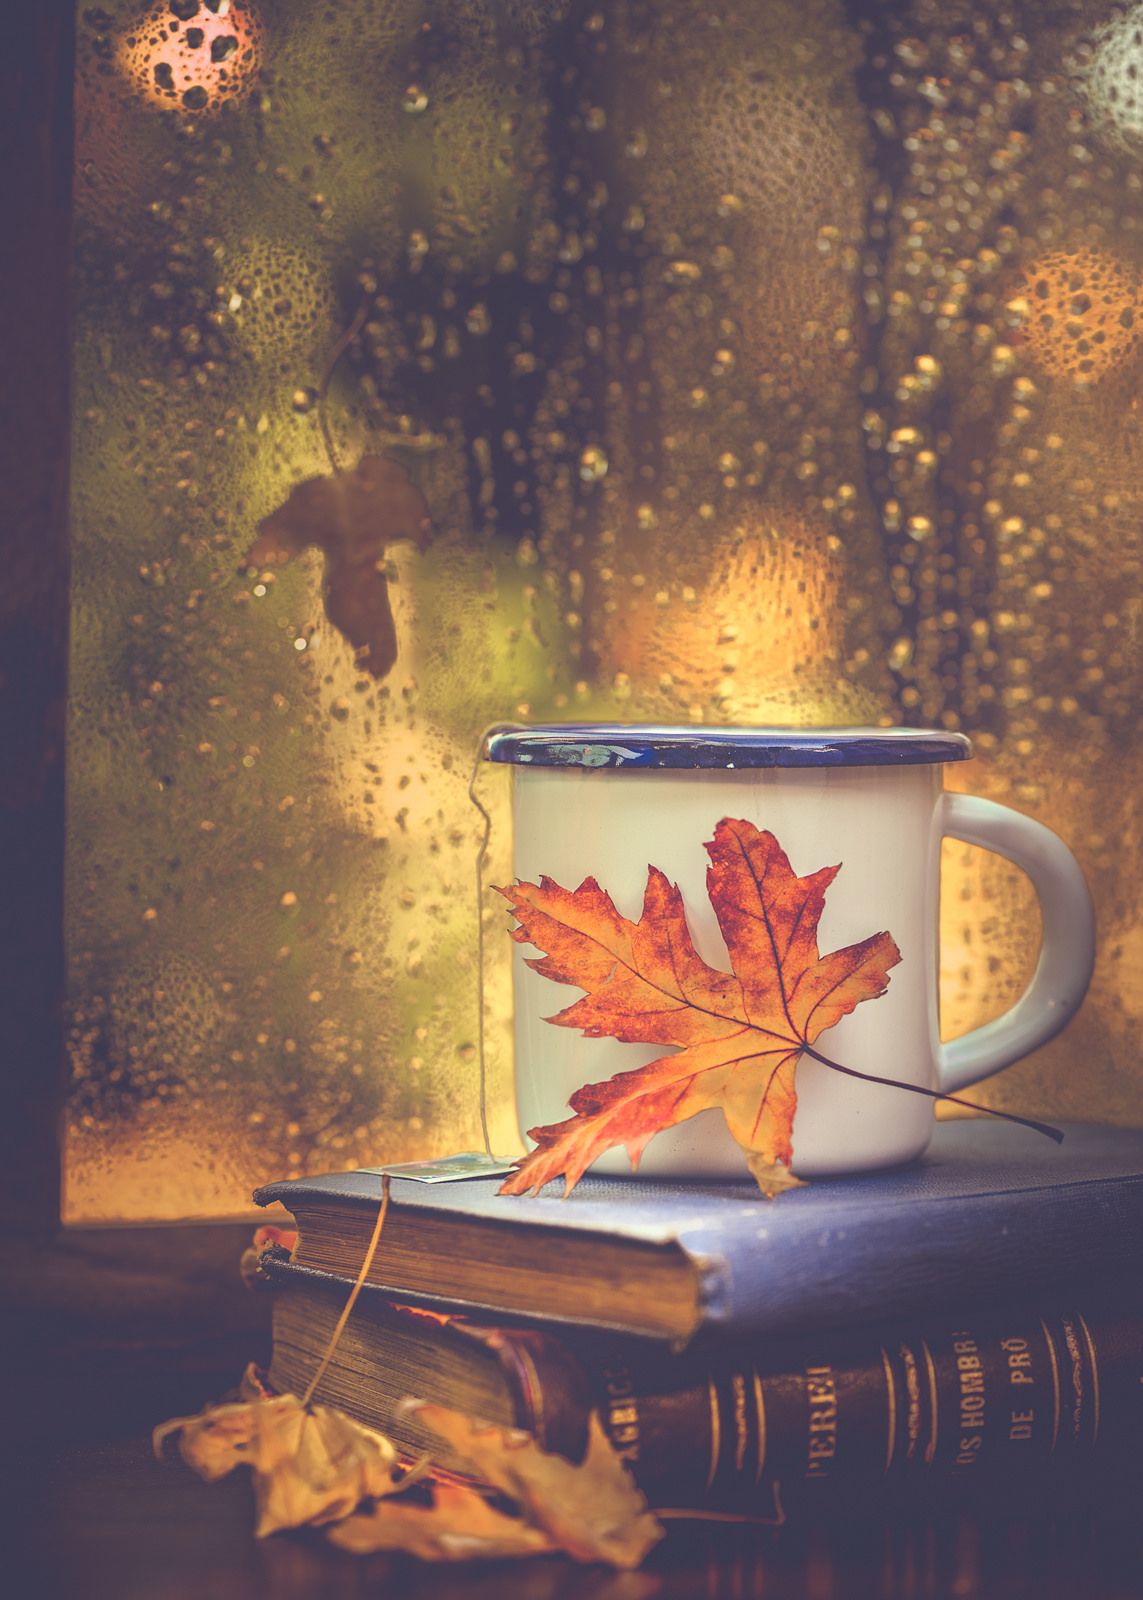 Books Tea And Rain Drops Autumn Inspiration Fall Pictures